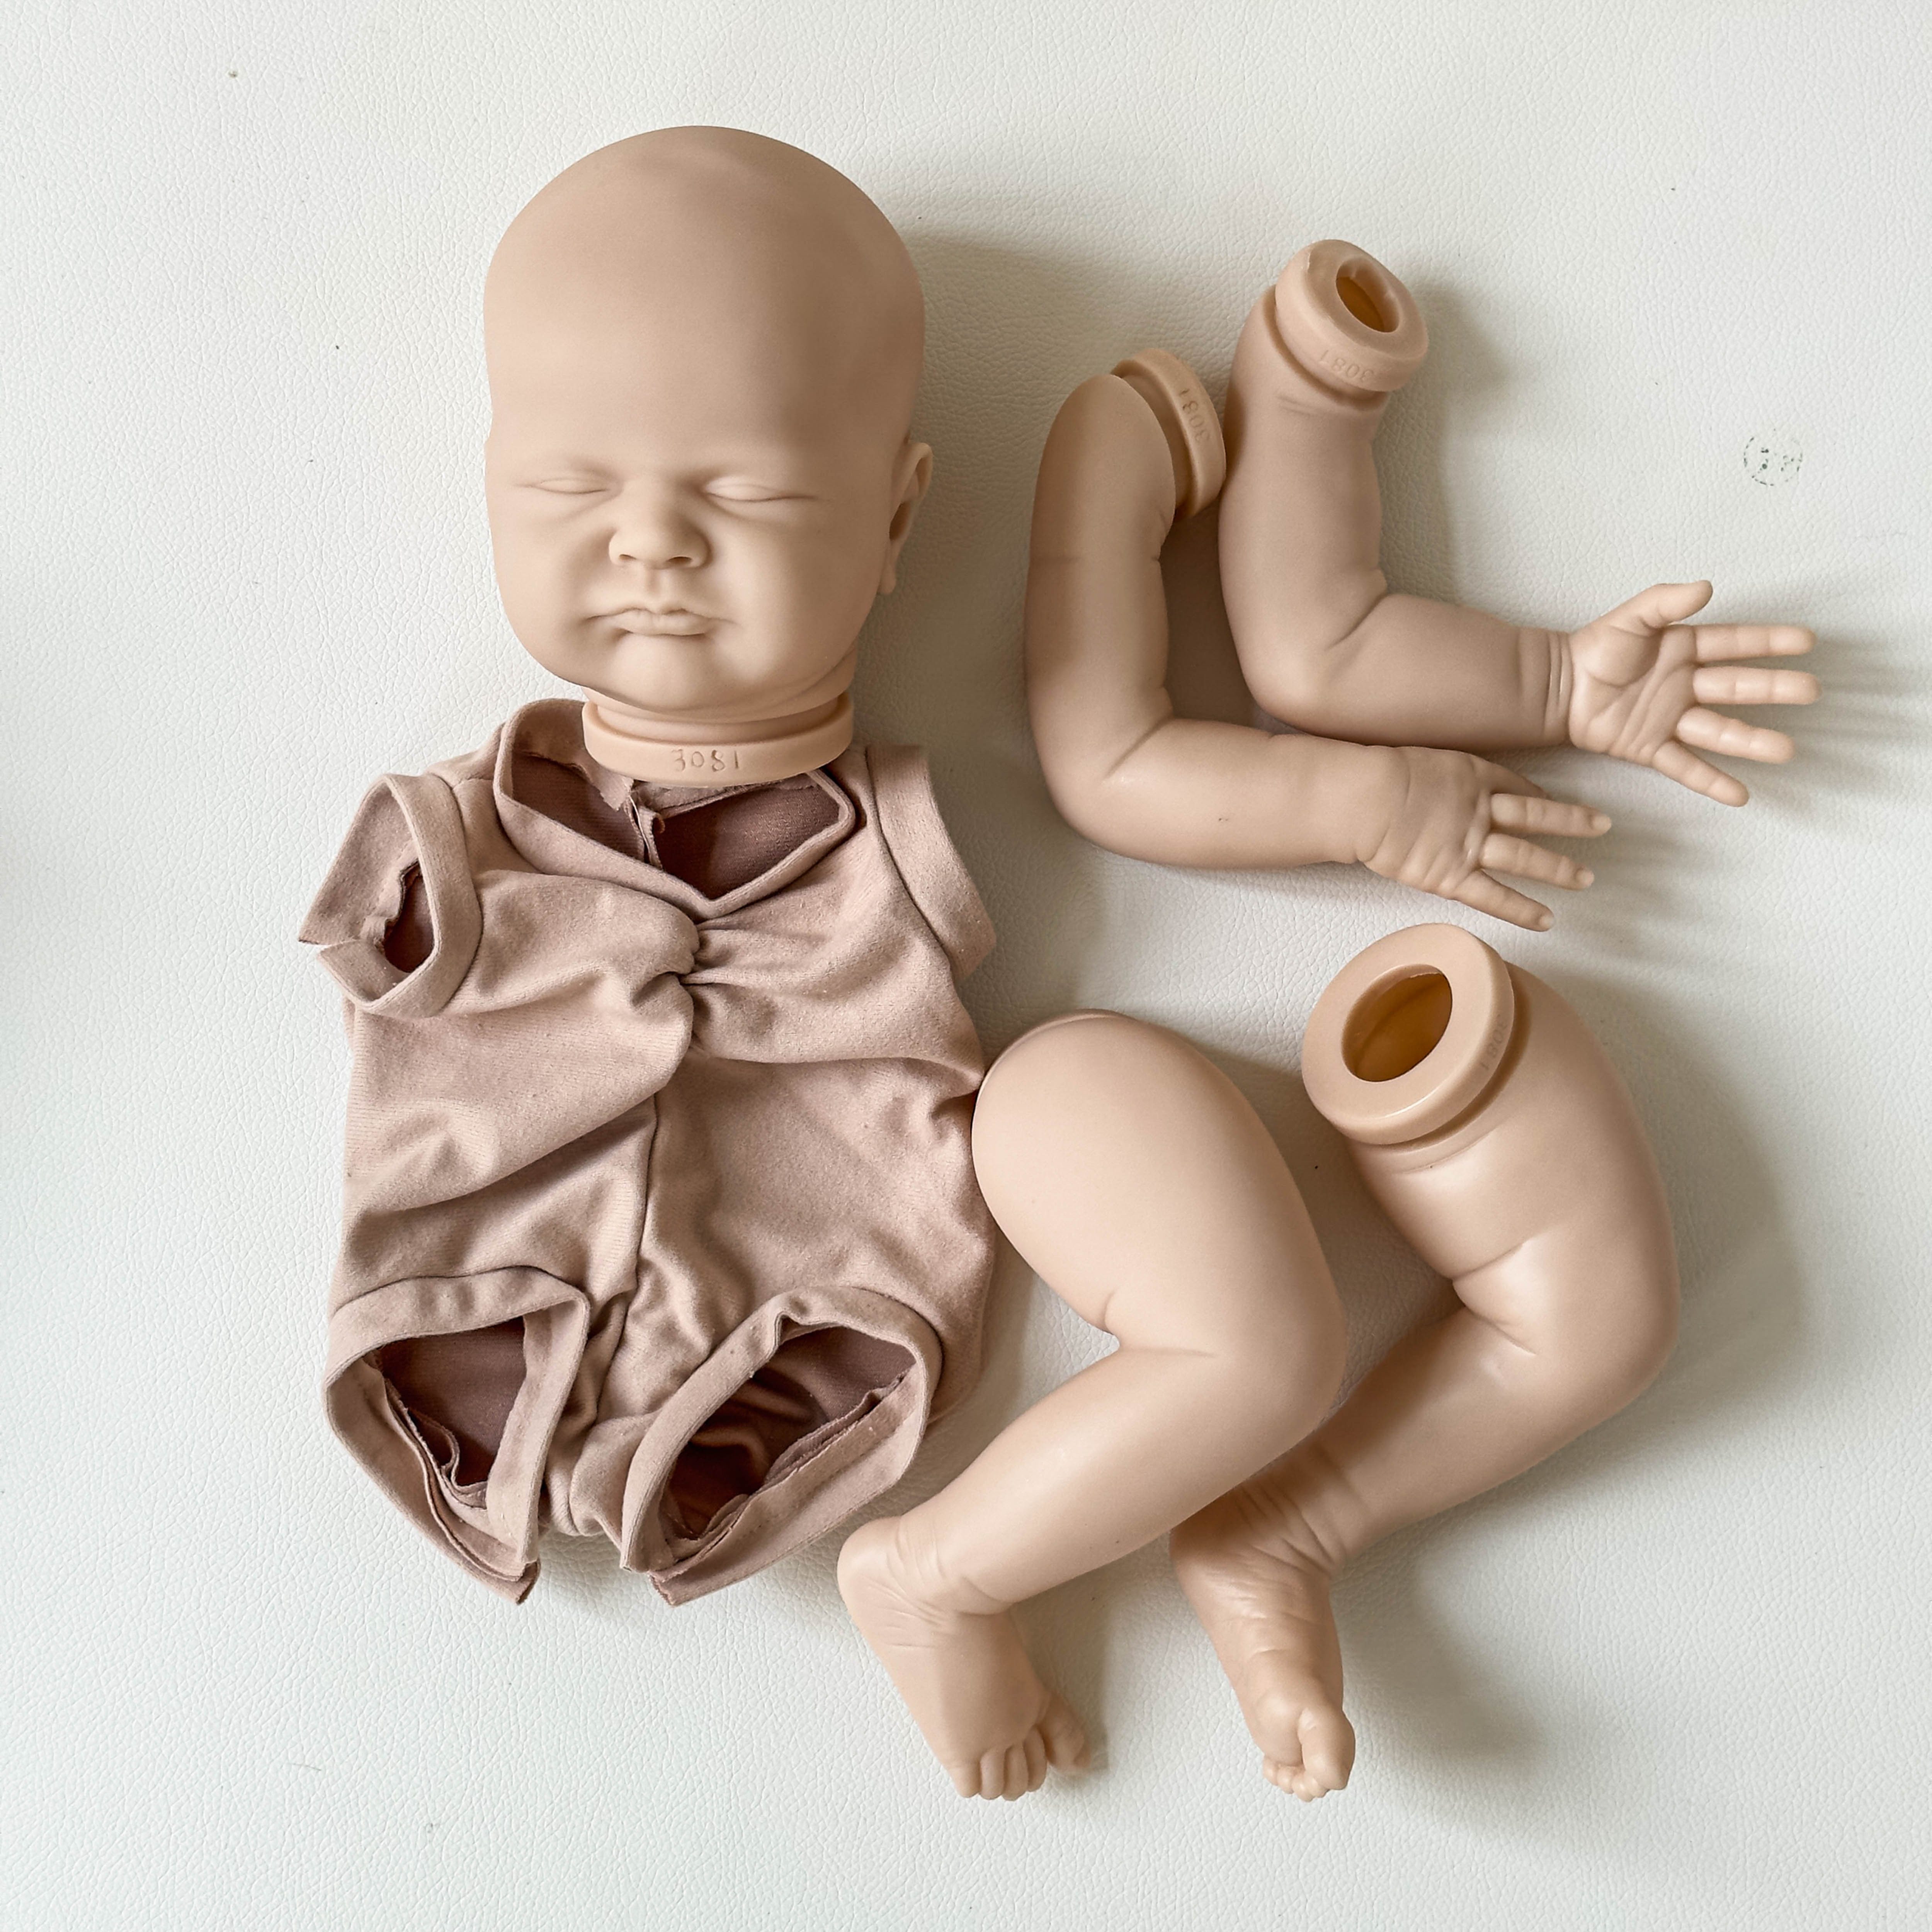 19 Inch/ 48cm Unpainted Doll DIY Kits, Reborn Doll, With Cloth Body